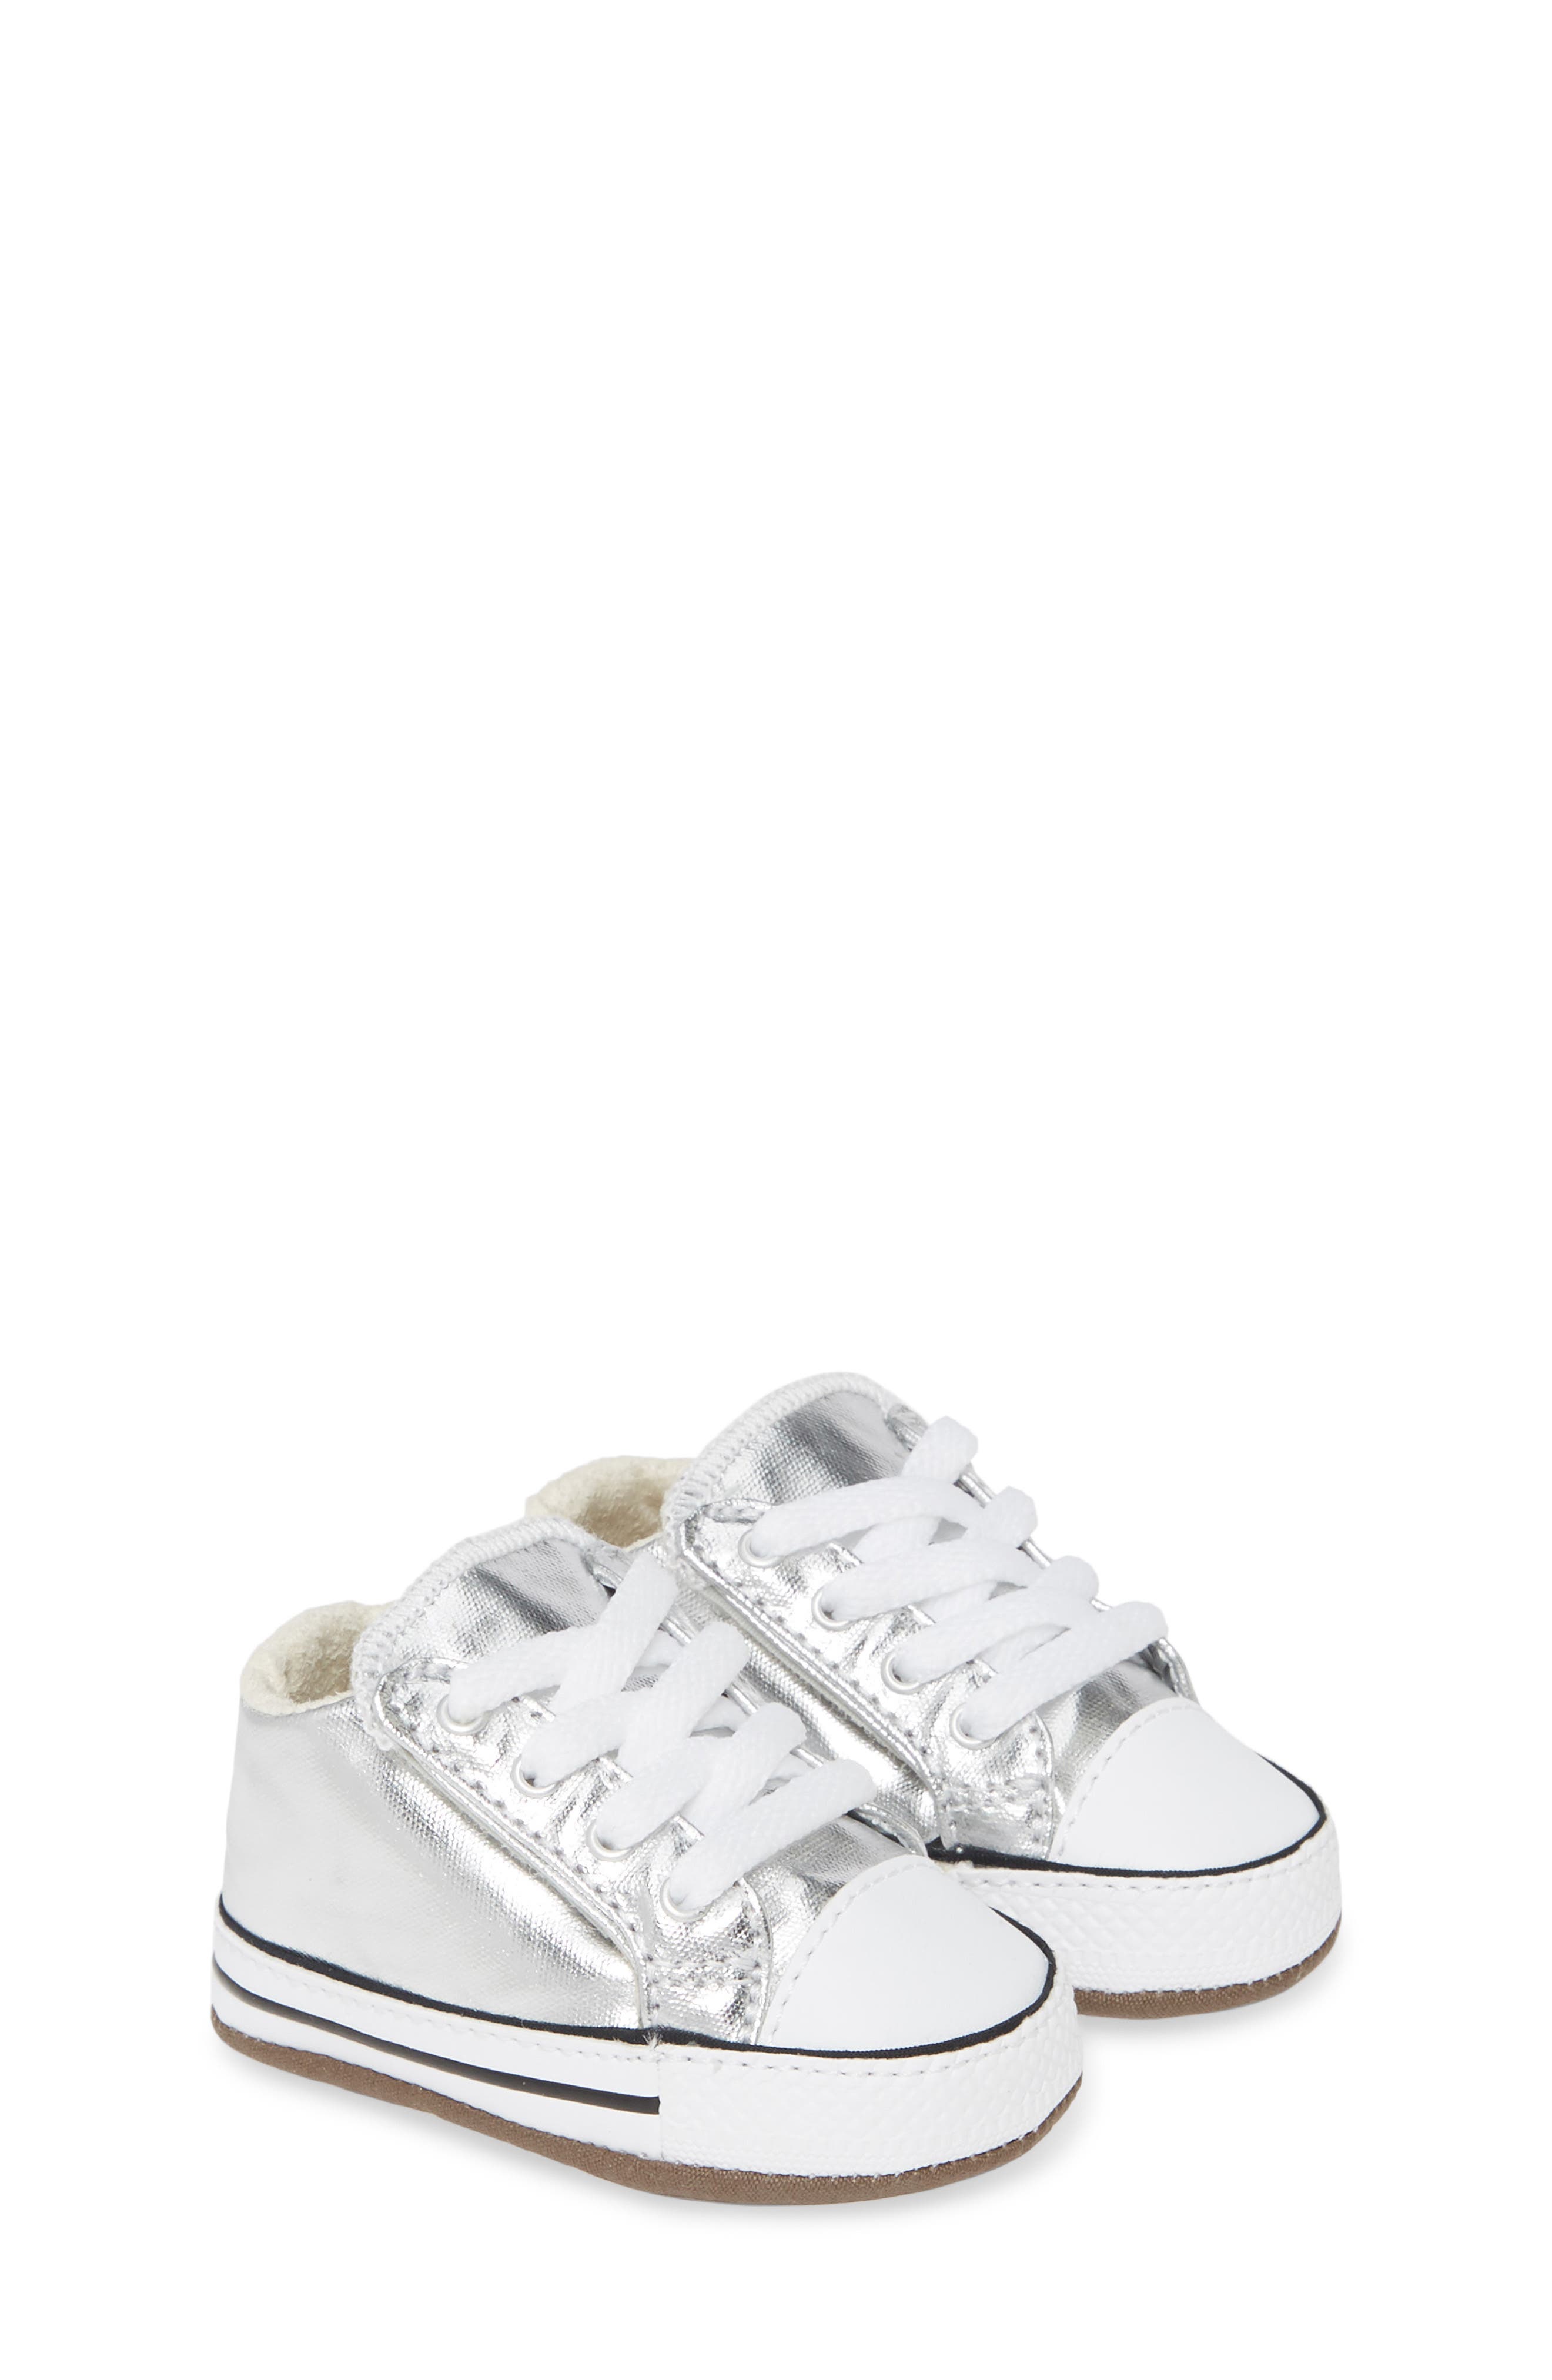 baby crib converse shoes